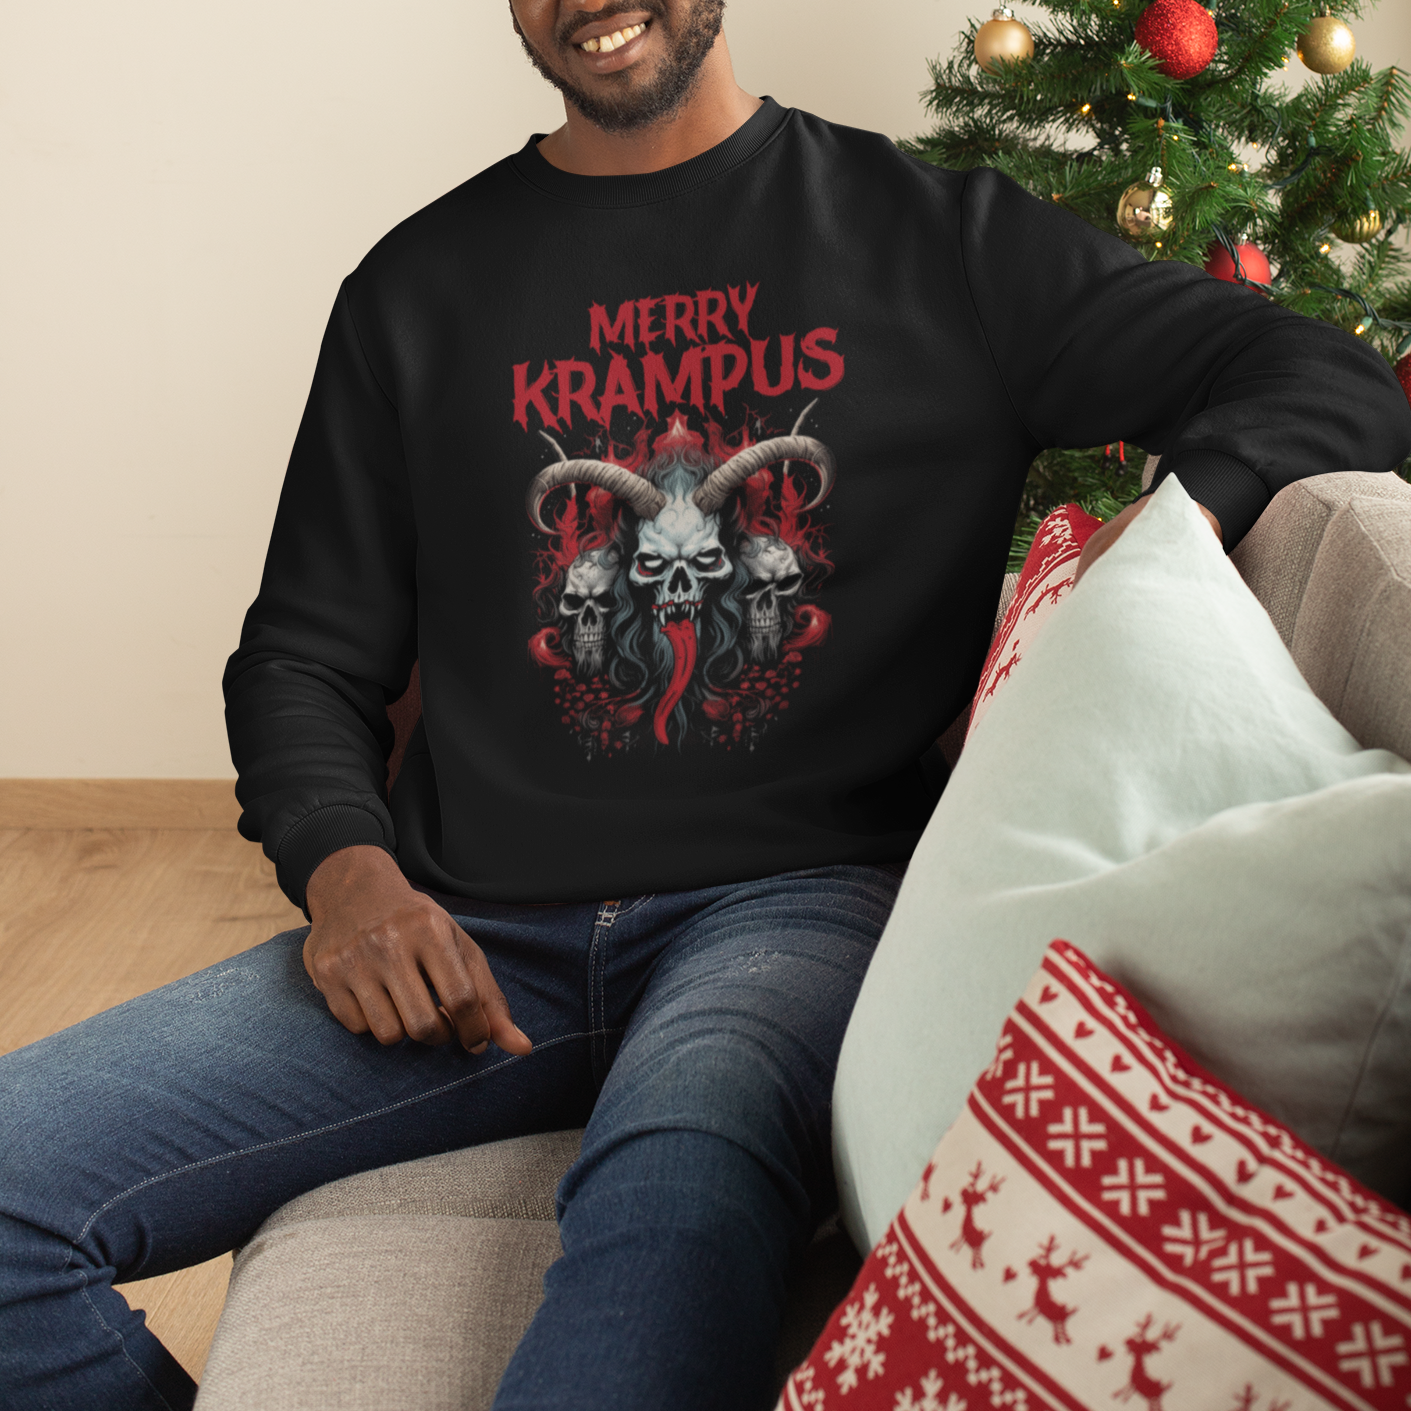 Merry Krampus Horor Christmas Evil Sweatshirt TS09